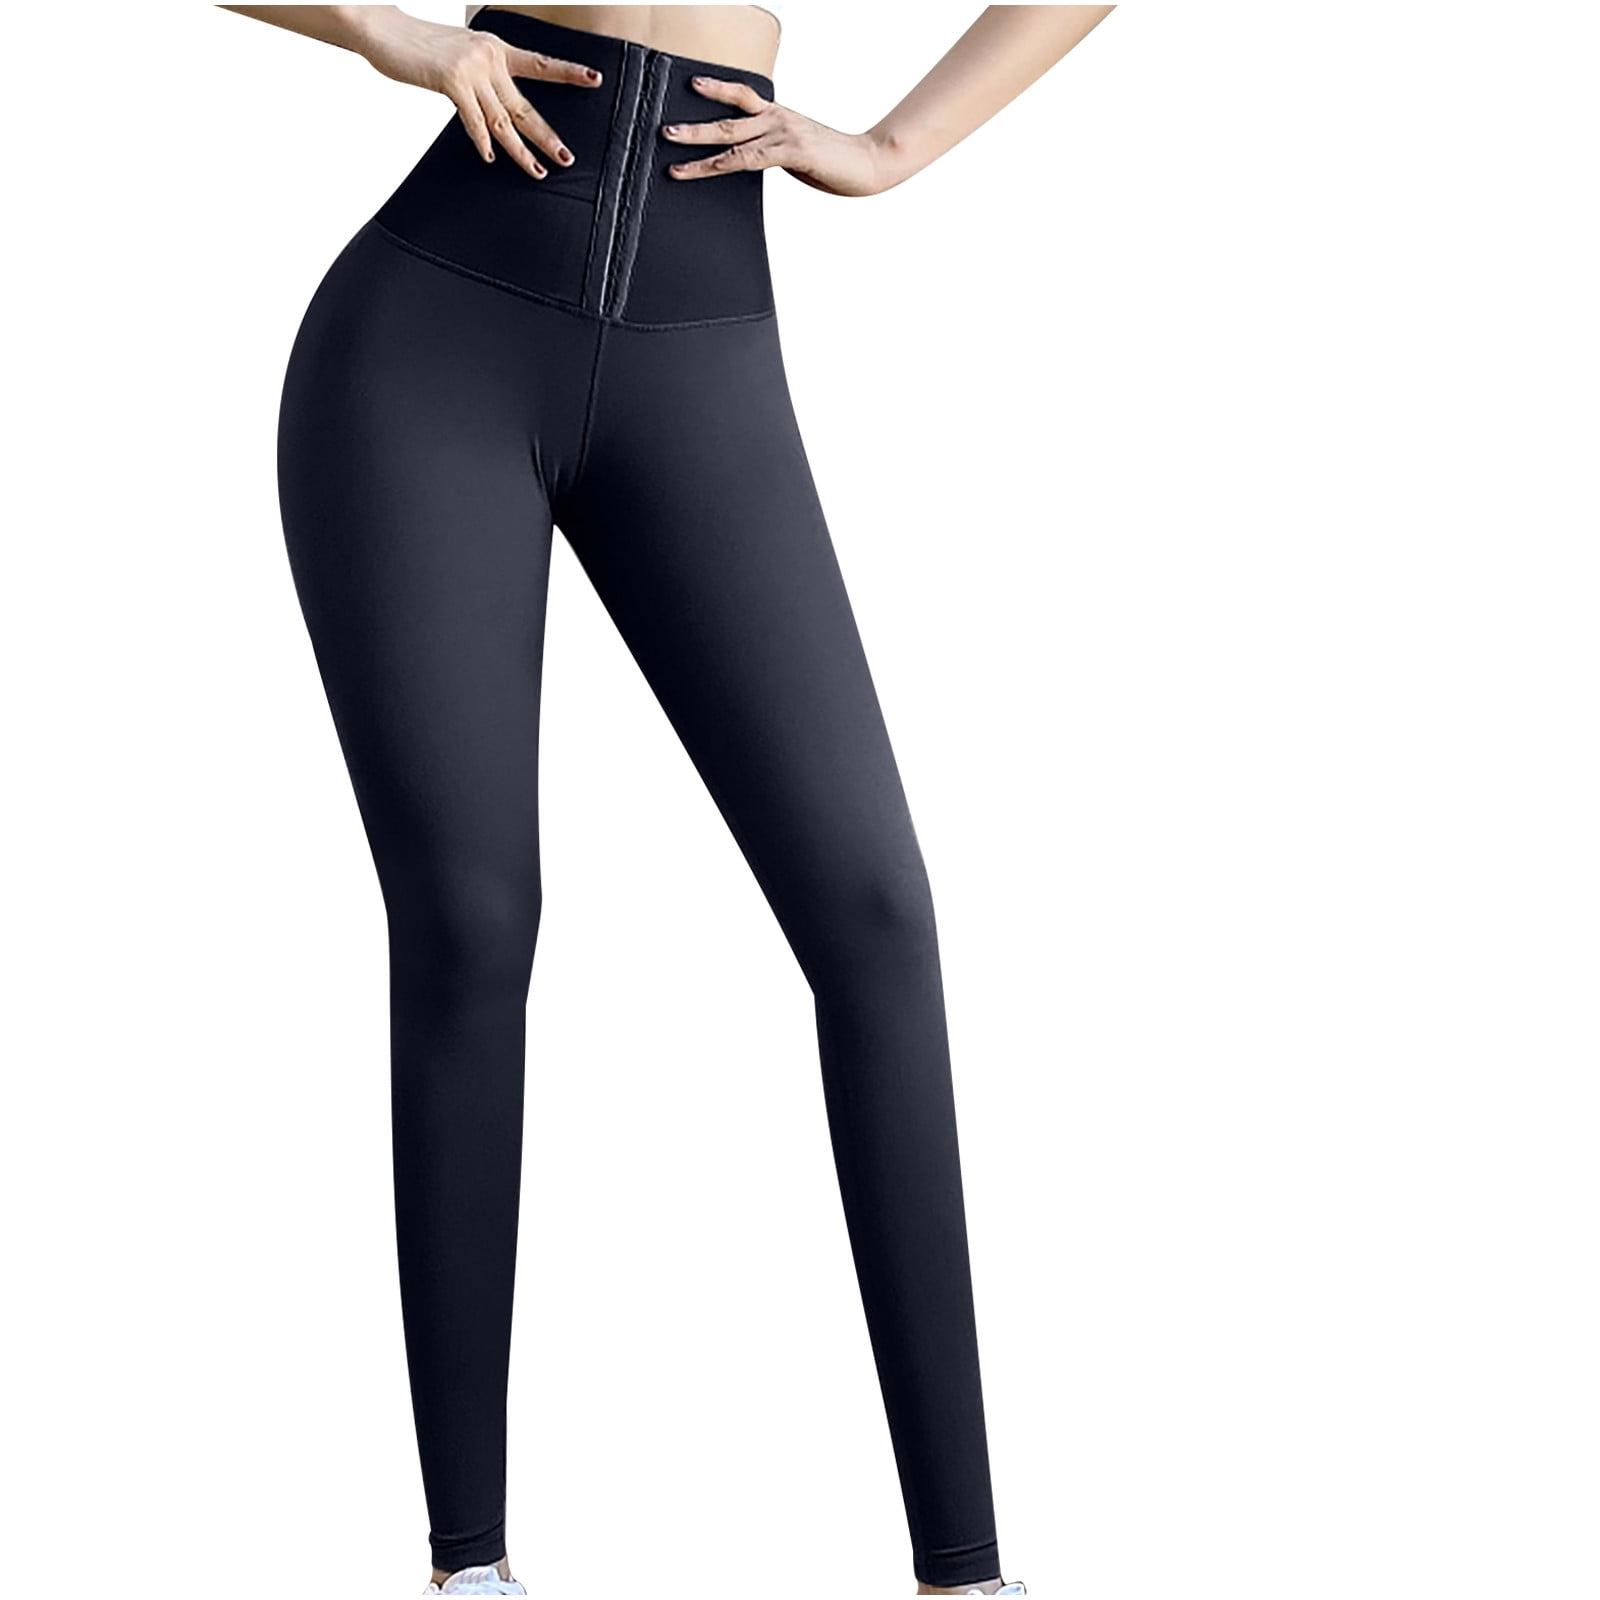 Mipaws High Waist Yoga Pants 7/8 Length Tummy Control Workout